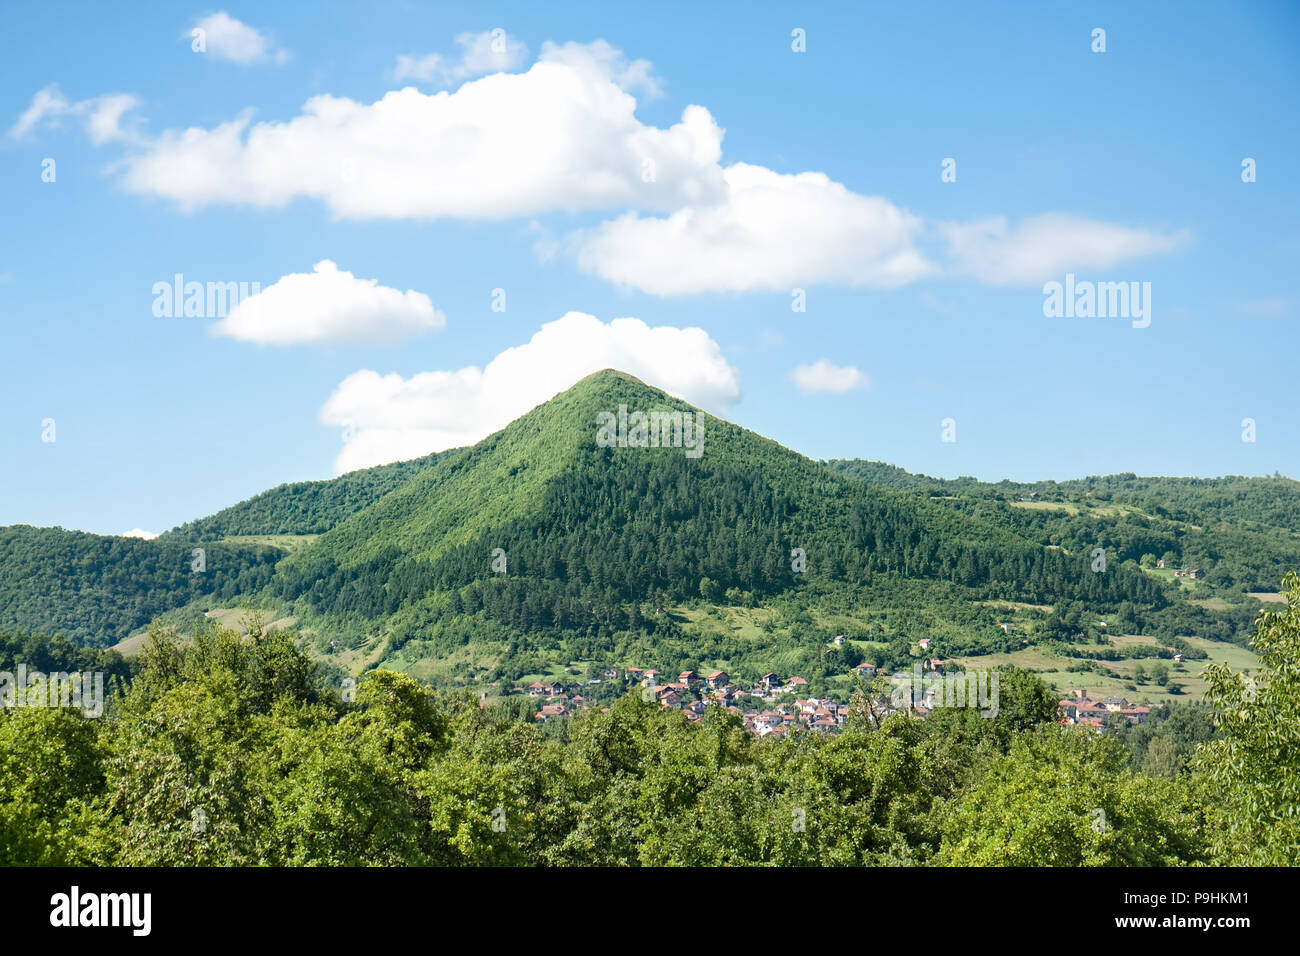 Bosnian pyramids, near the Visoko city, Bosnia and Herzegovina Stock Photo